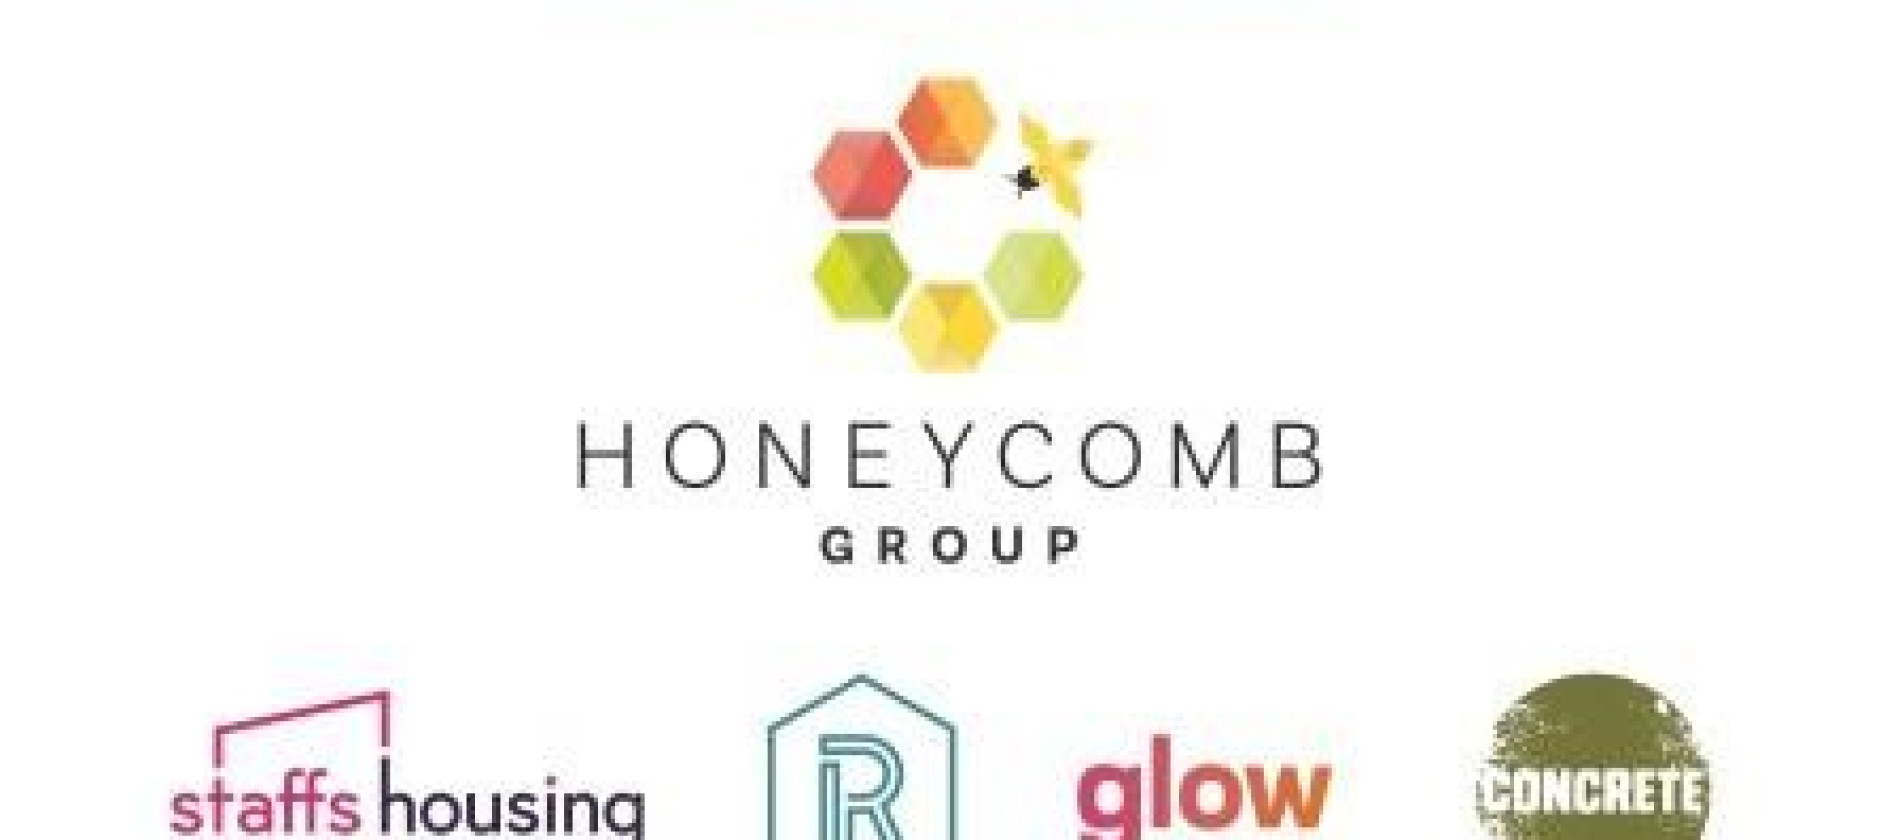 honeycomb group